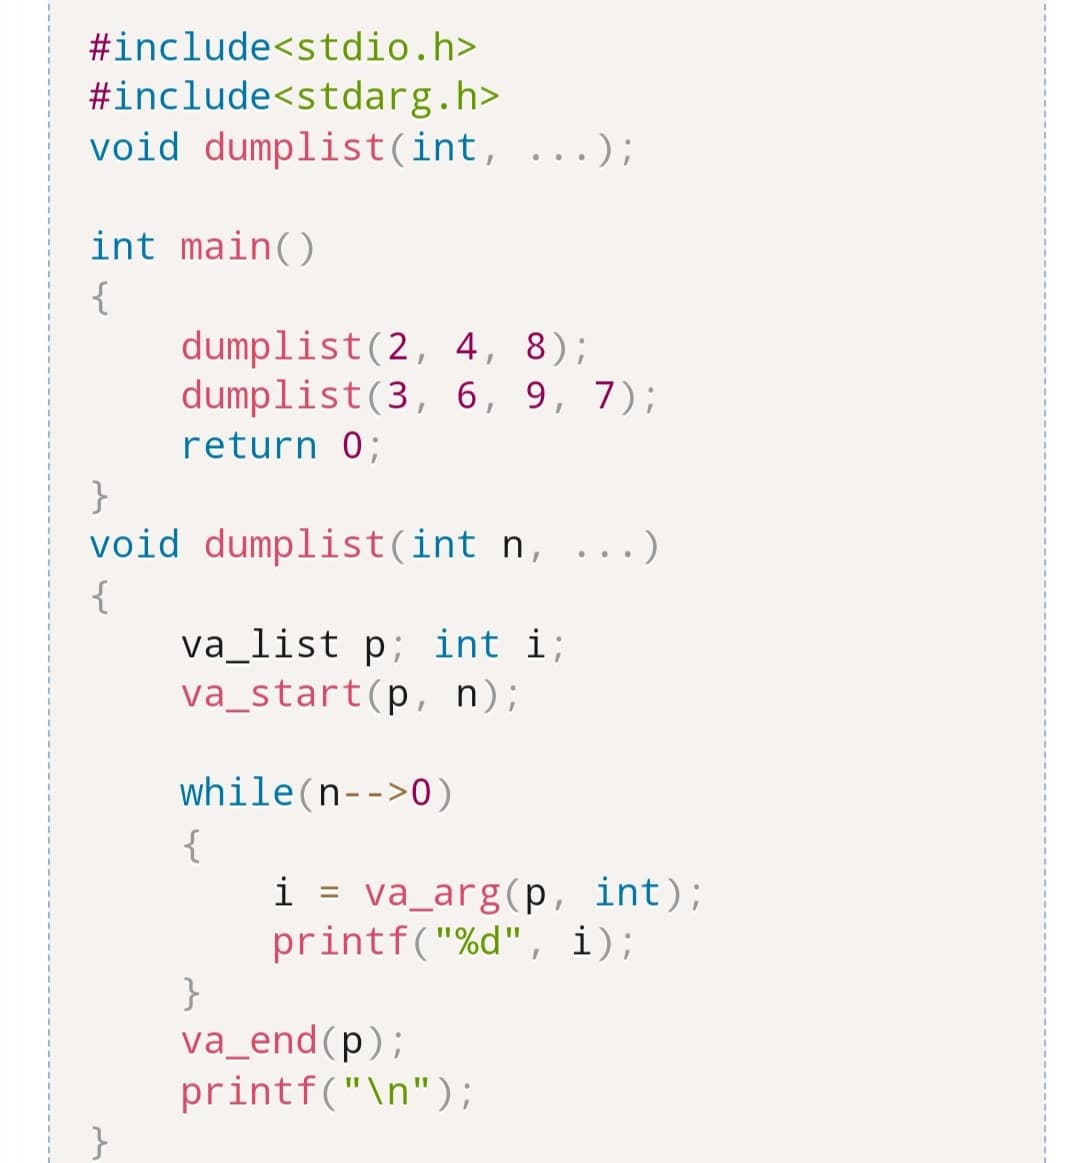 #include<stdio.h>
#include<stdarg.h>
void dumplist(int, ...);
int main()
{
}
void
{
dumplist (2, 4, 8);
dumplist (3, 6, 9, 7);
return 0;
dumplist(int n, ...)
va_list p; int i;
va_start(p, n);
while(n-->0)
{
i = va_arg(p, int);
printf("%d", i);
}
va_end (p);
printf("\n");